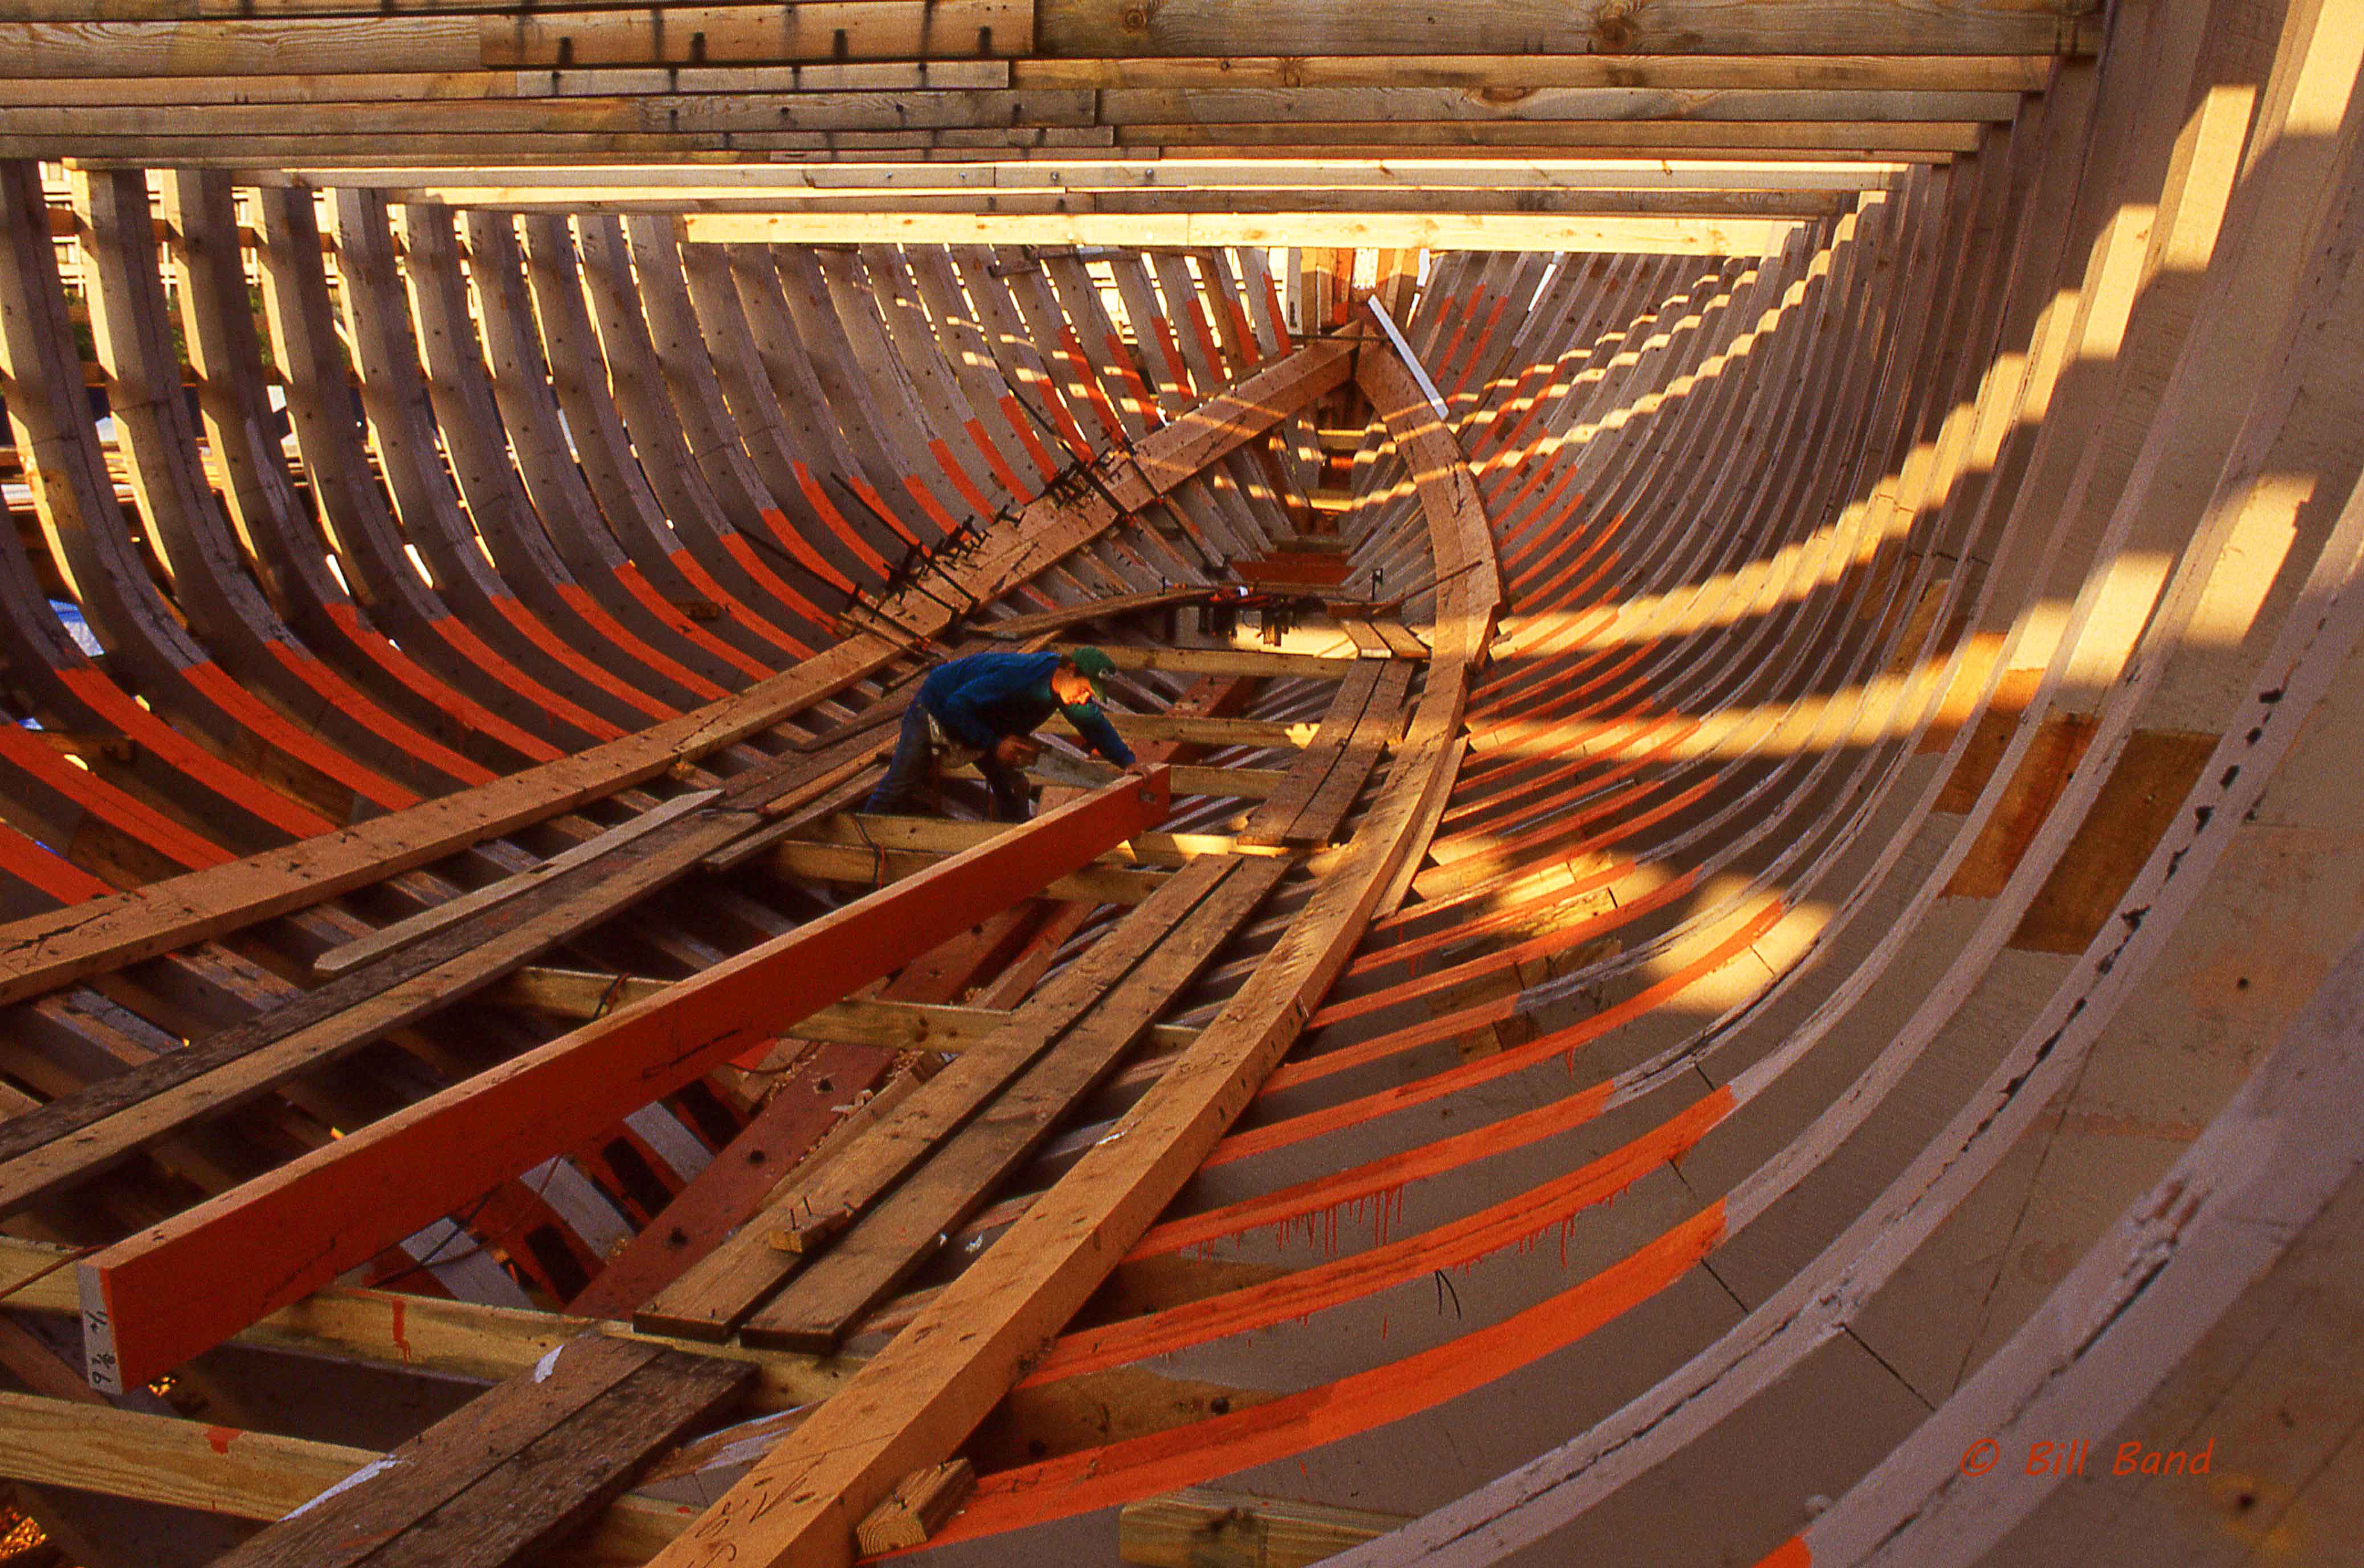 Construction, 1987, courtesy of Bill Band